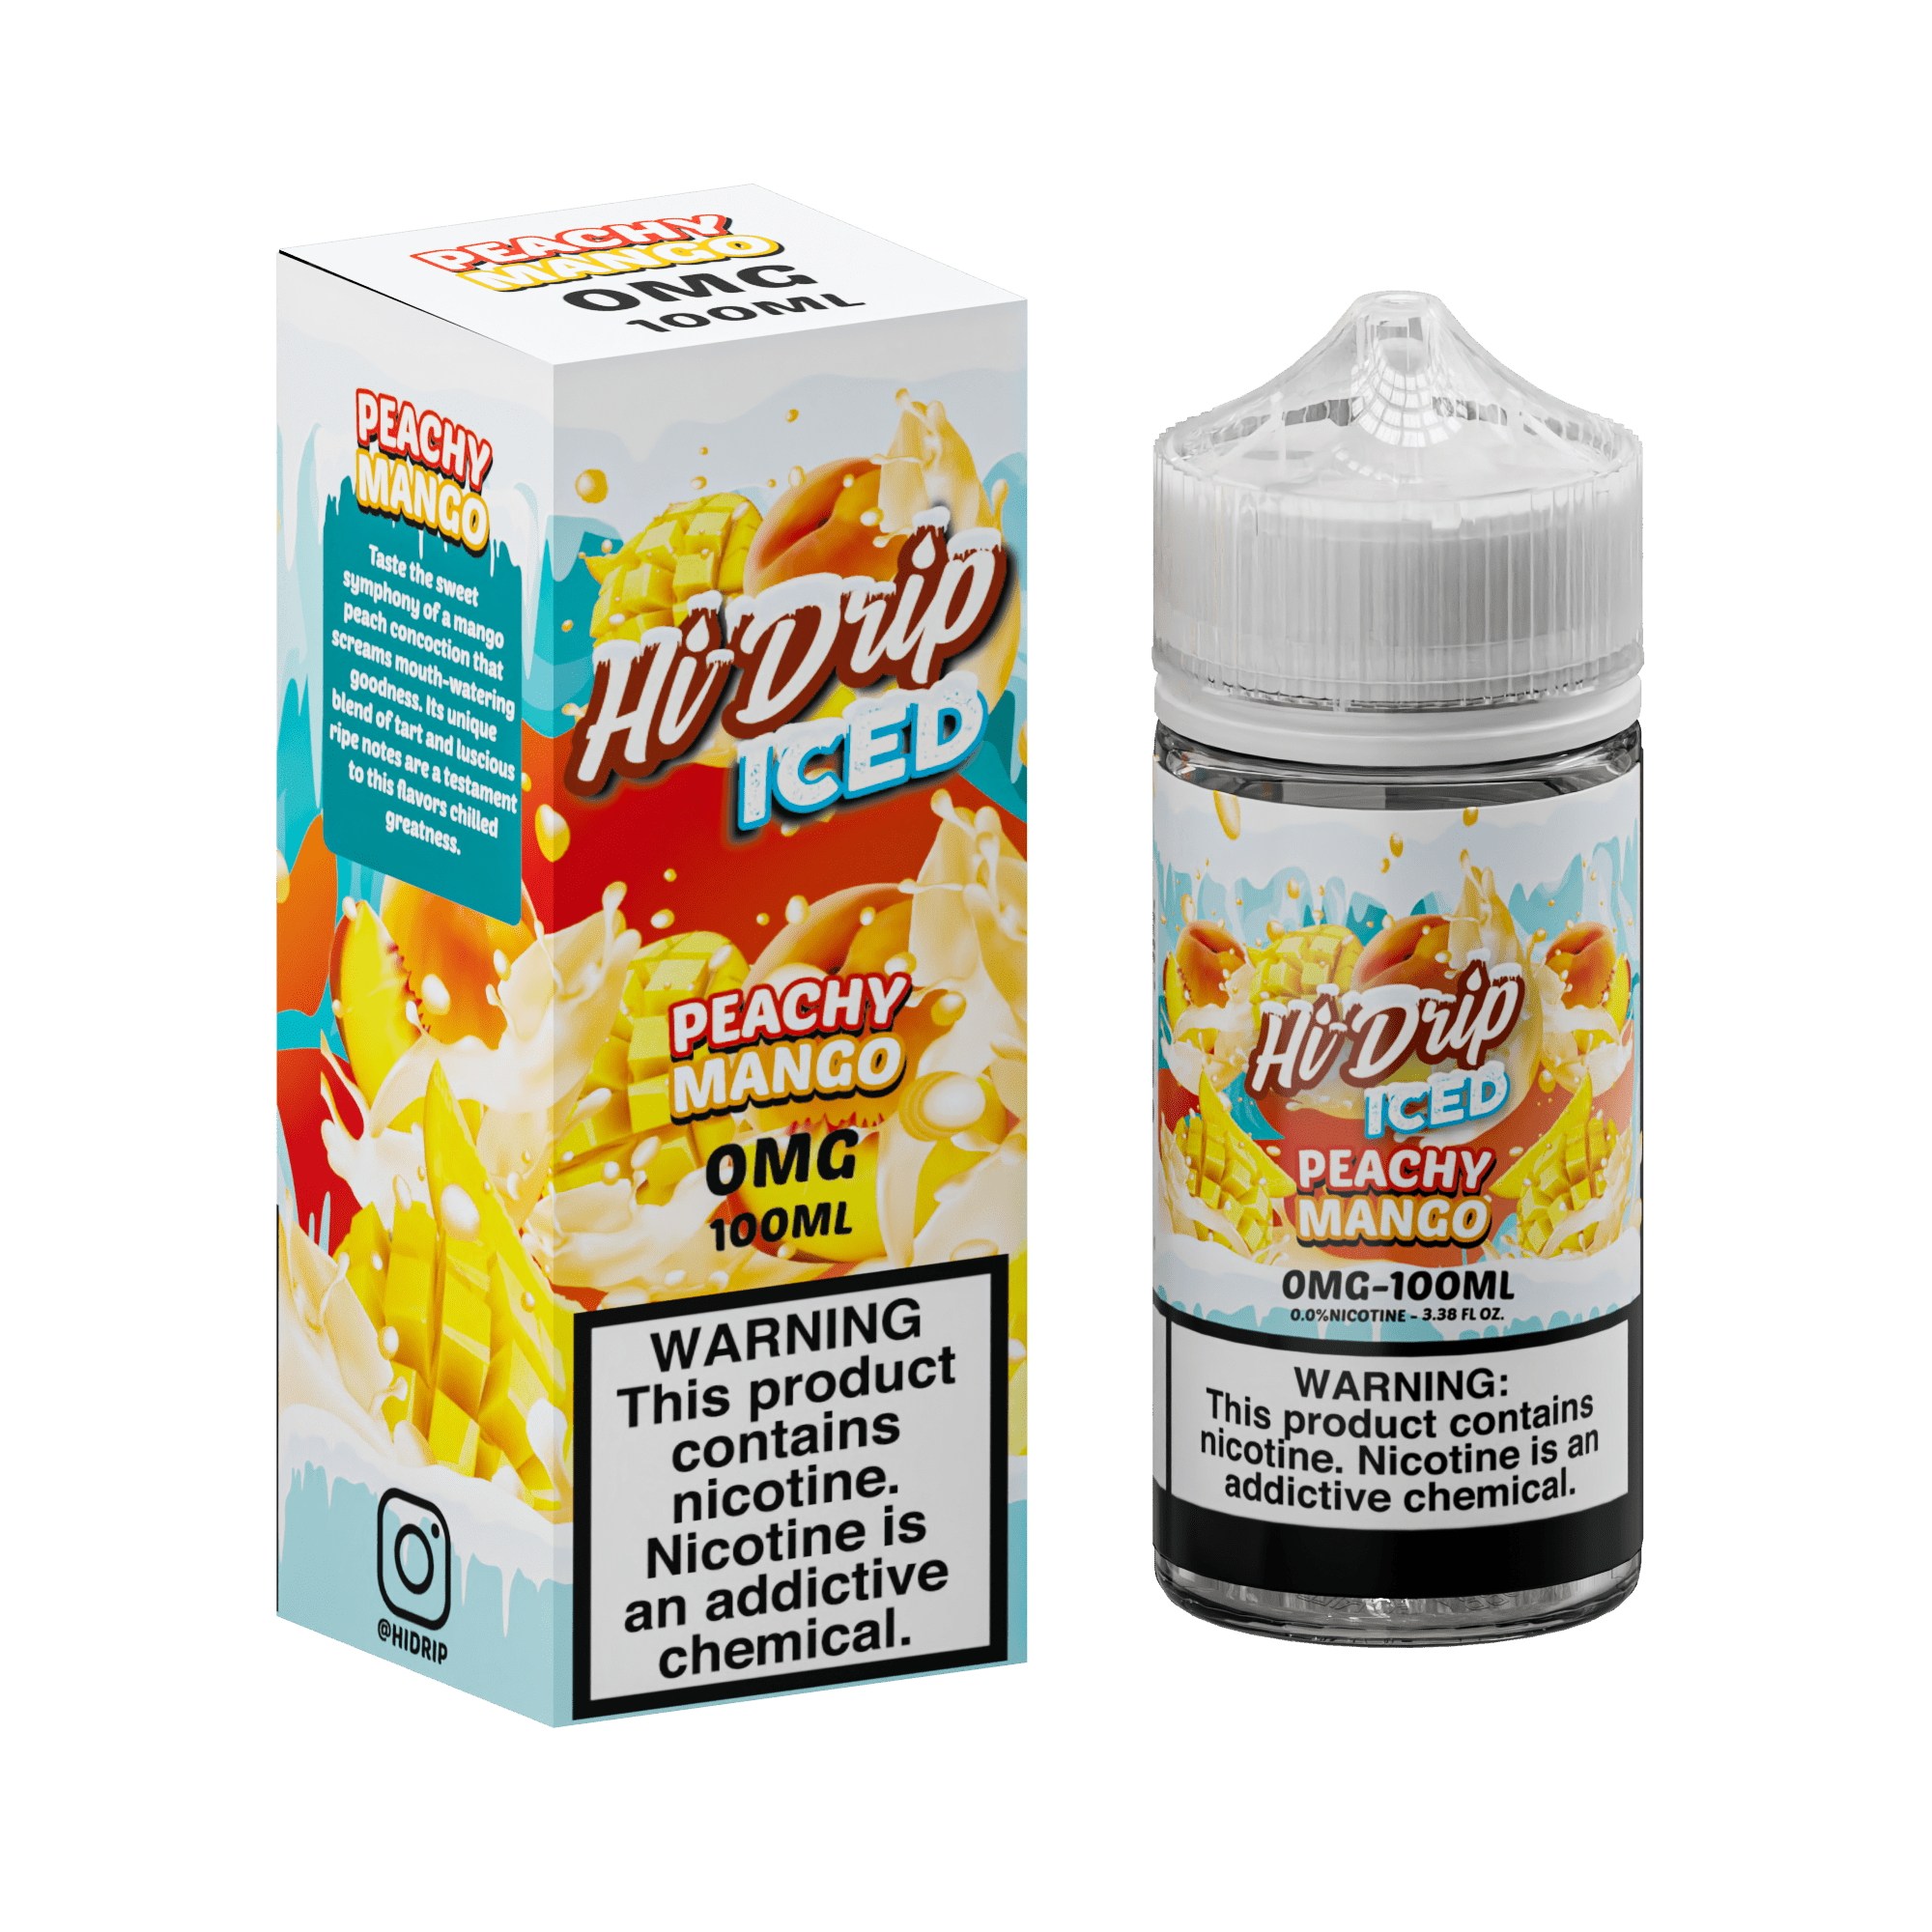 Hi-Drip Iced Peachy Mango 100ml Vape Juice